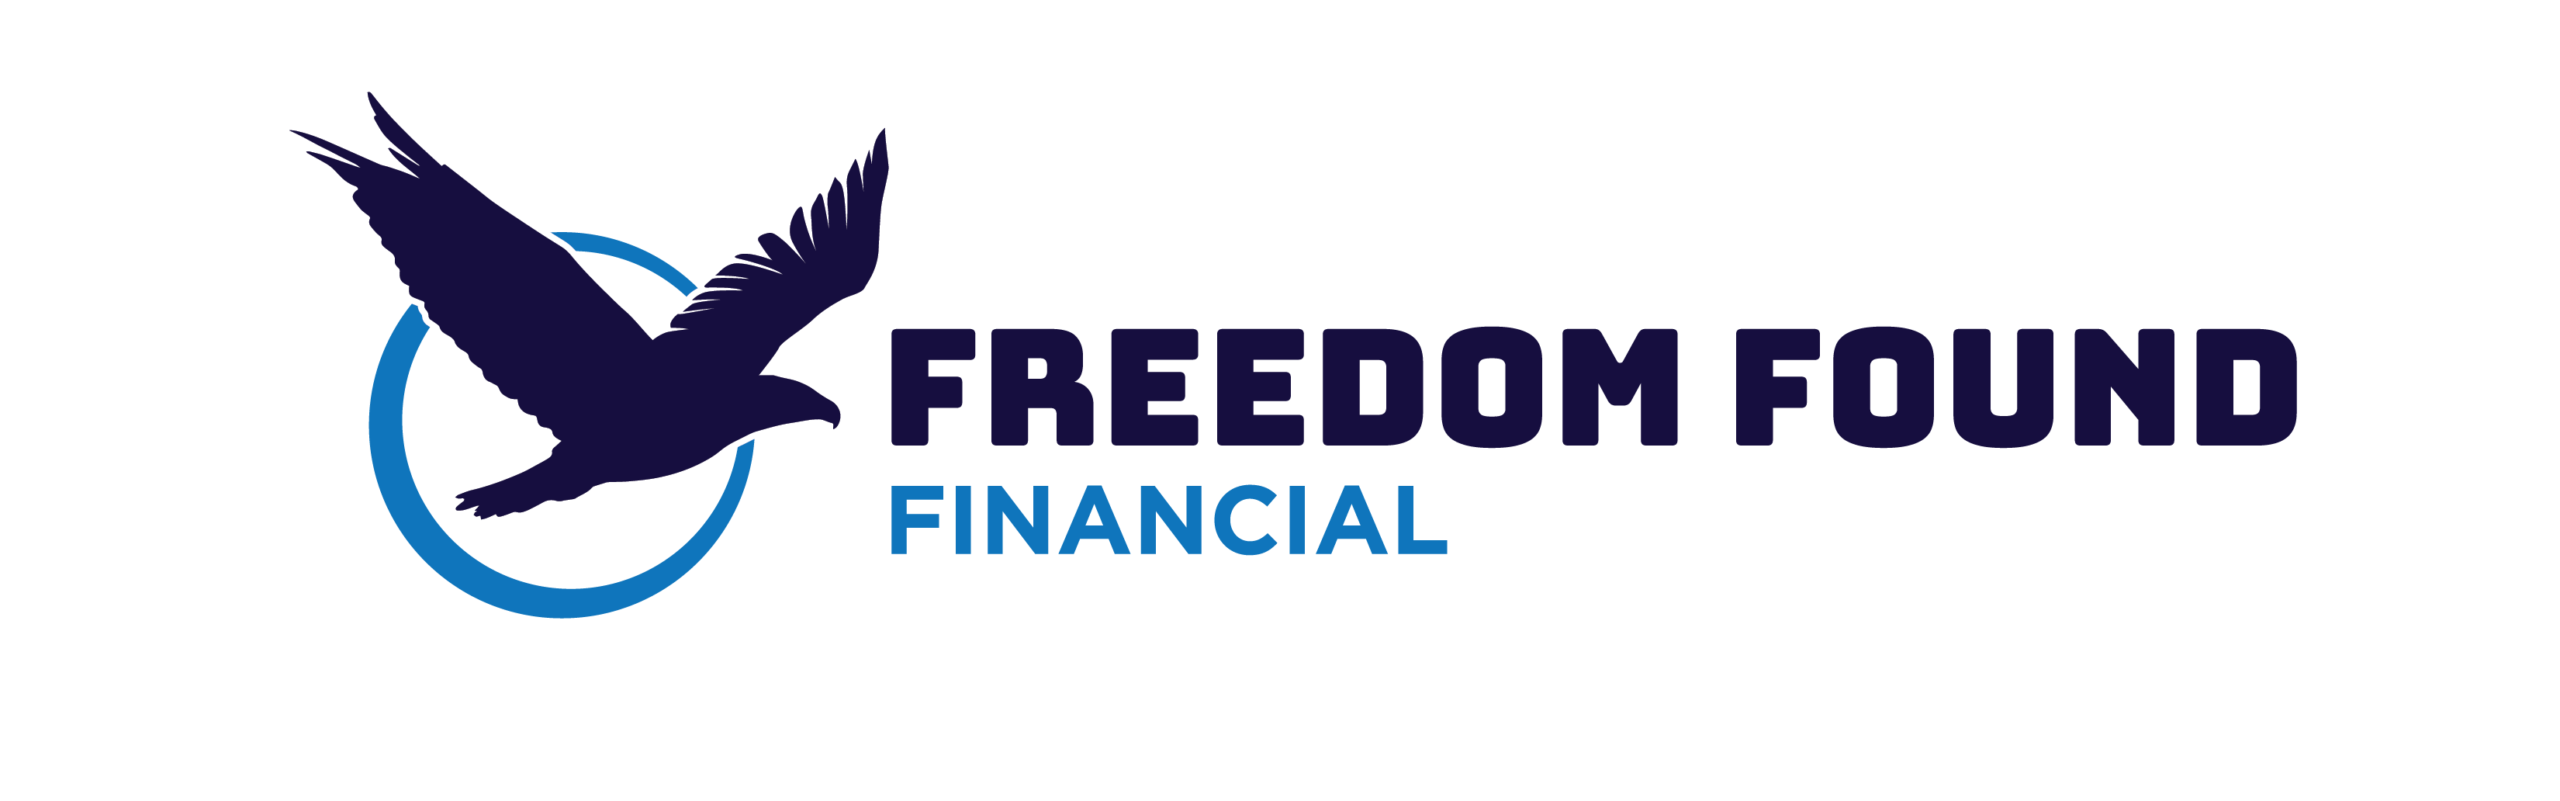 Freedom Found Financial